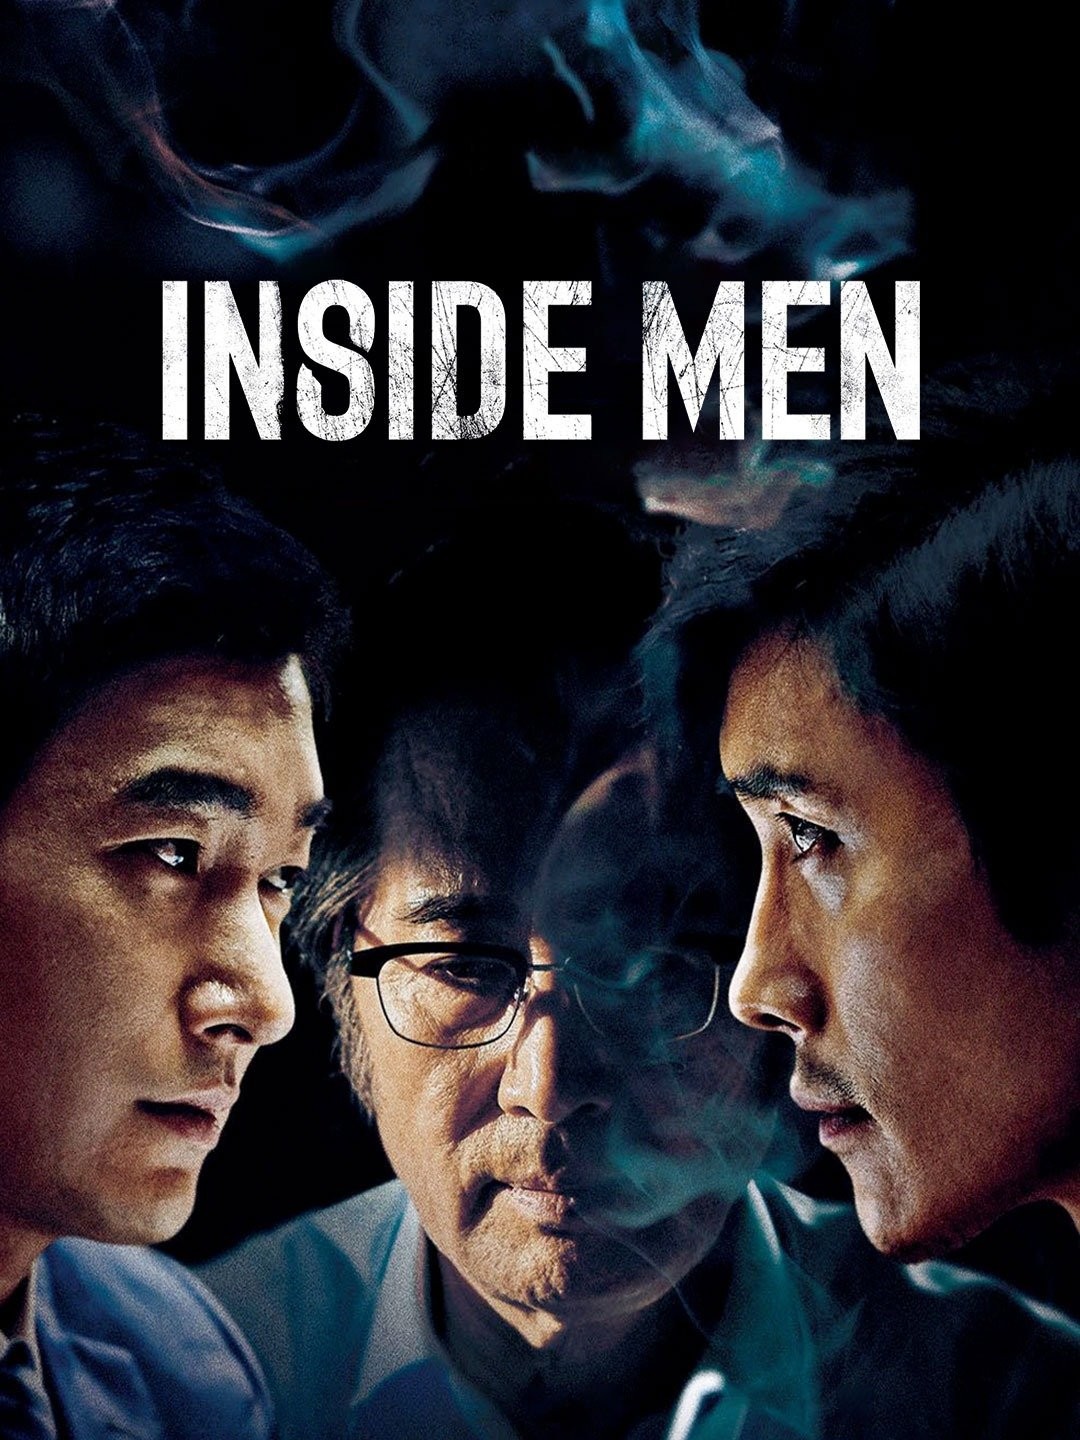 Inside Man - Rotten Tomatoes